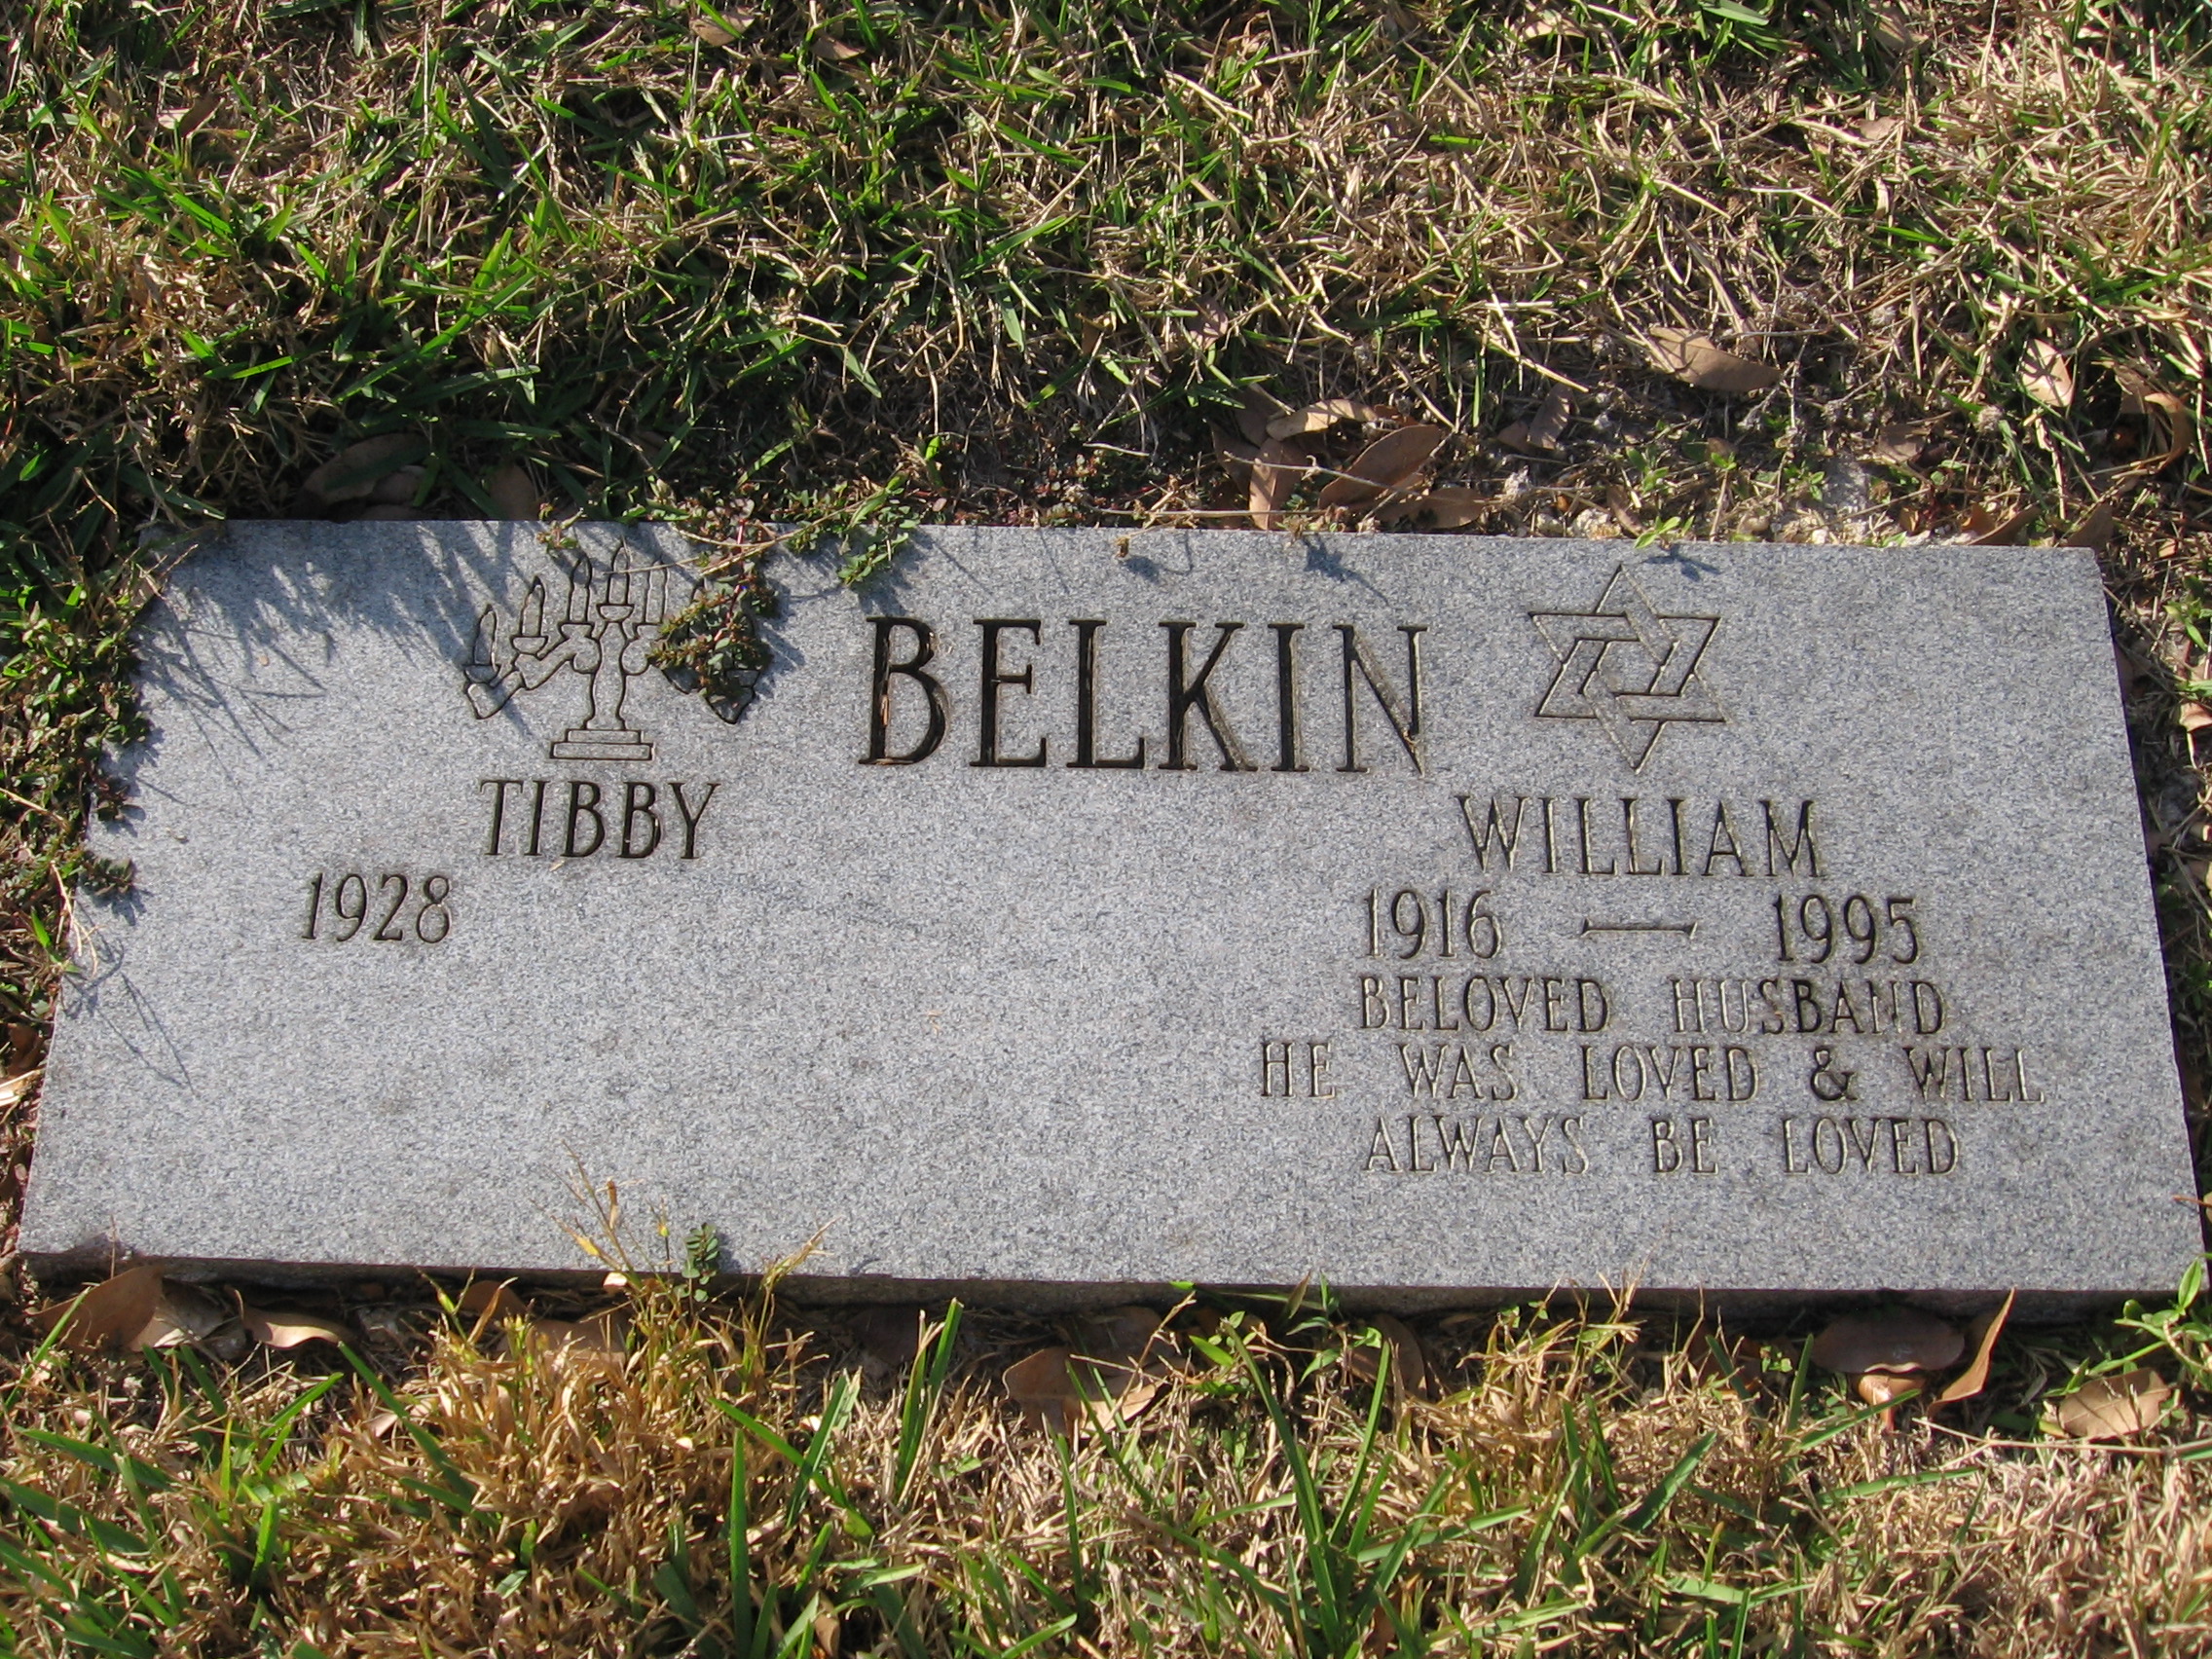 William Belkin